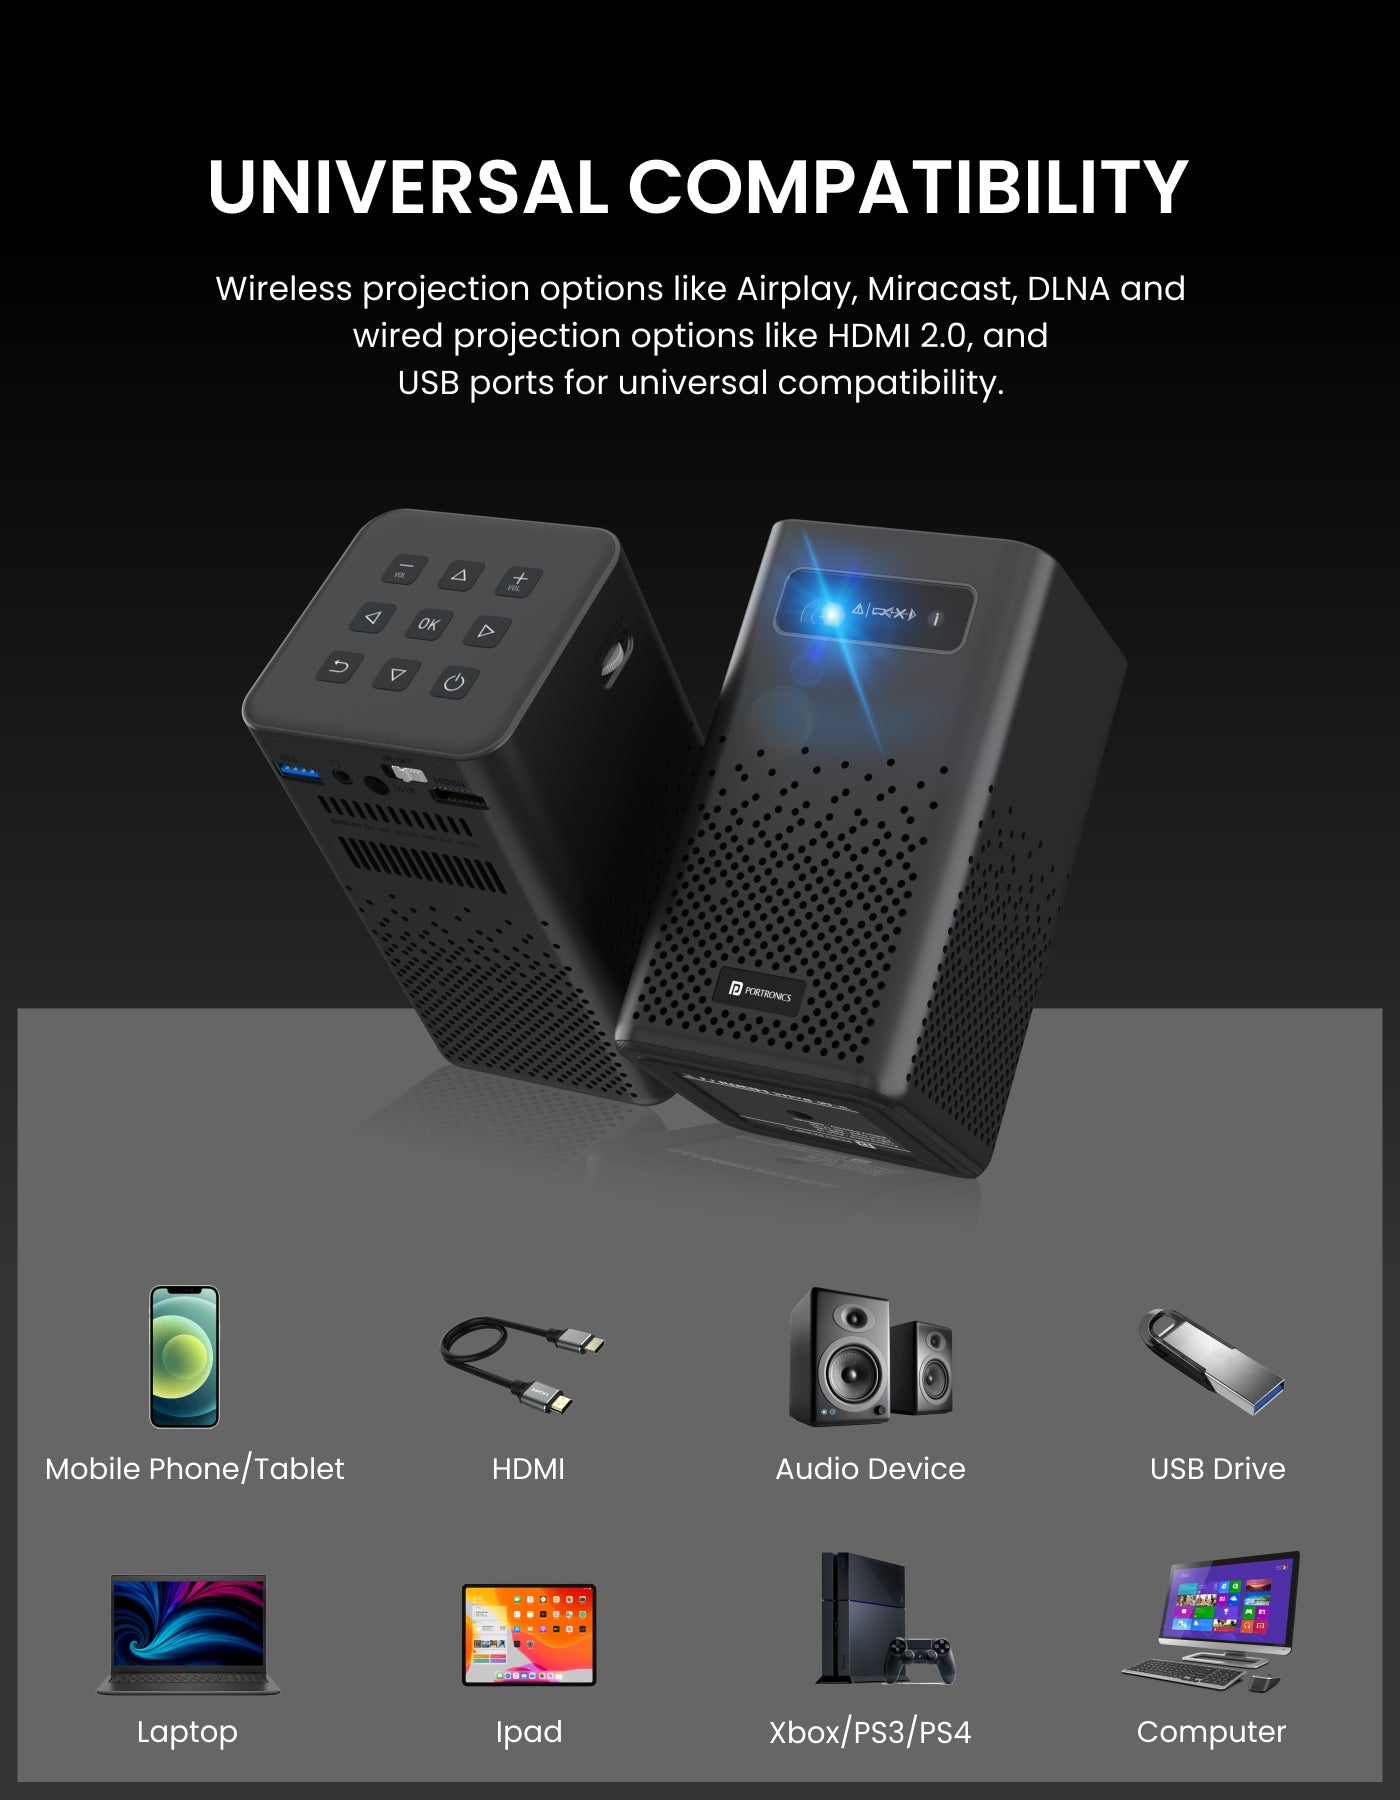 Portronics Pico 11 portable/smart/ bluetooth projector has universal compatibility